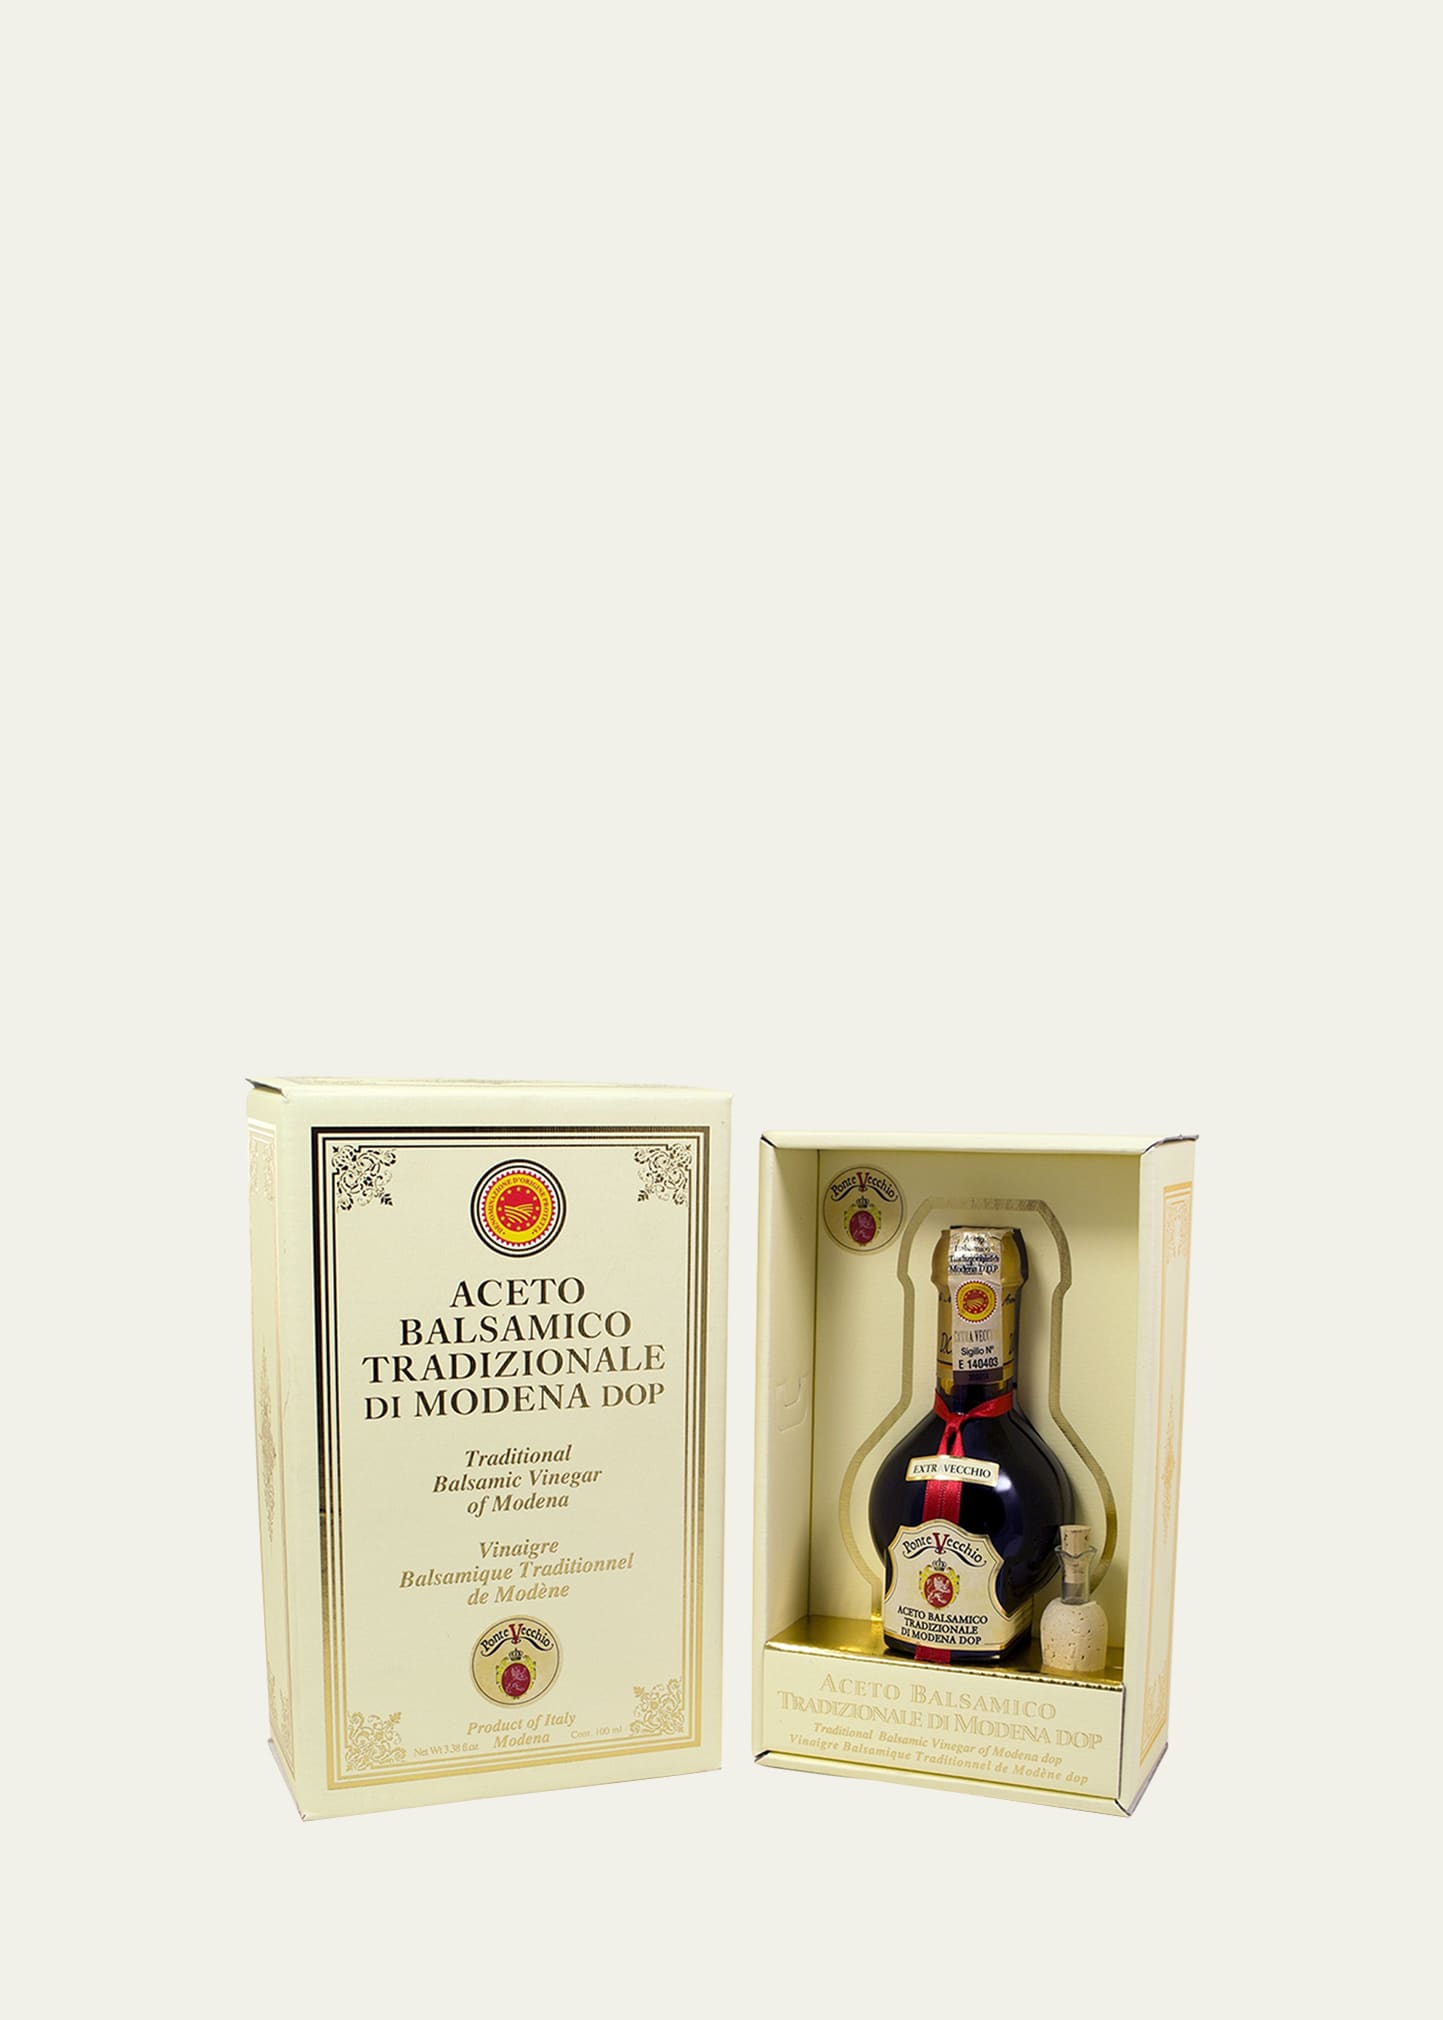 25 Years Aged Balsamic Vinegar of Modena DOP